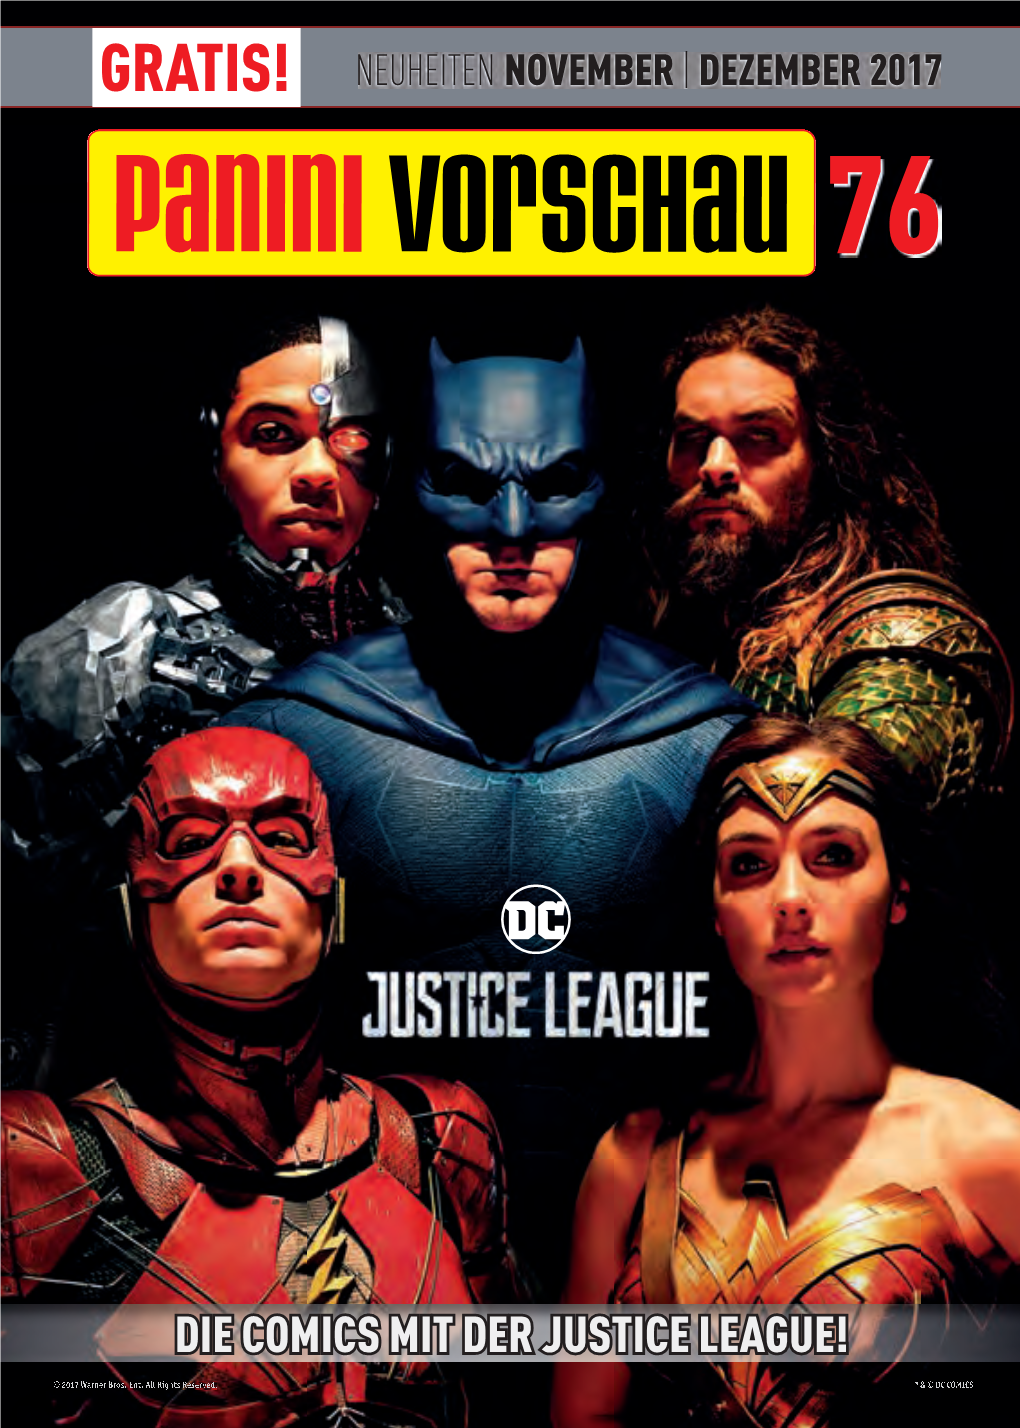 Die Comics Mit Der Justice League!